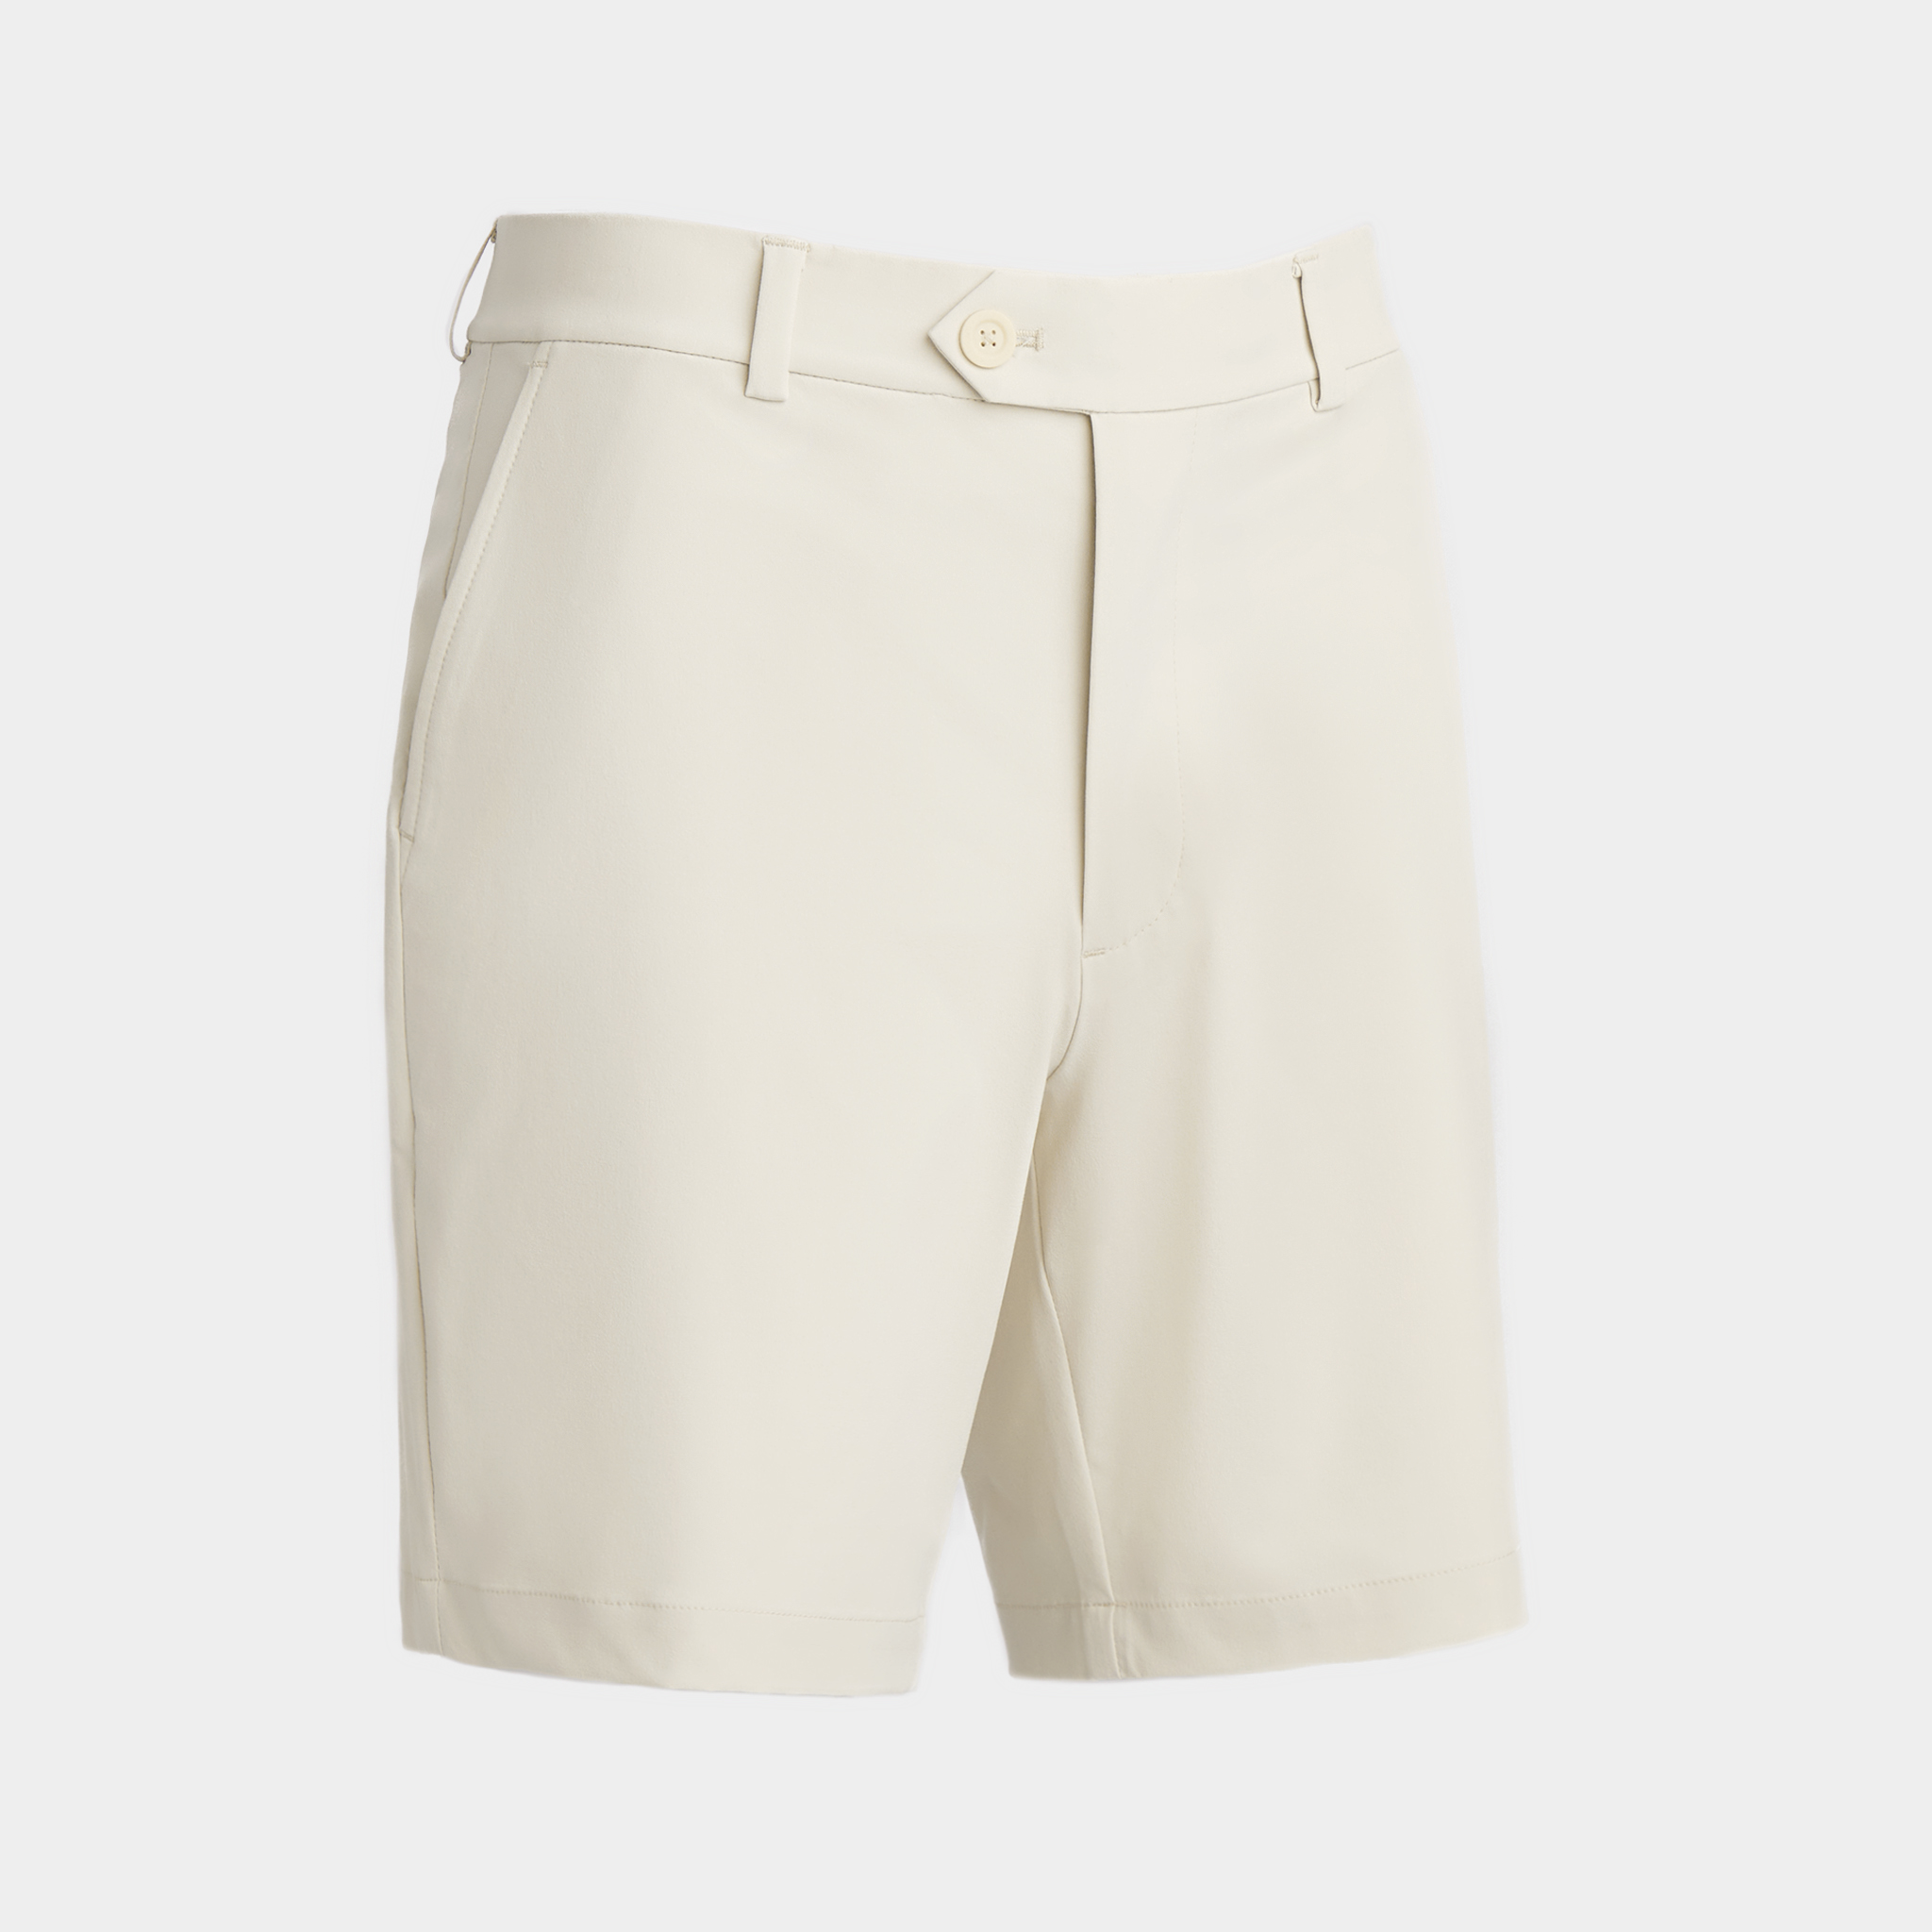 NEW G/Fore Golf Print Shorts Mens Waist Size 32 SNO Regular 730C